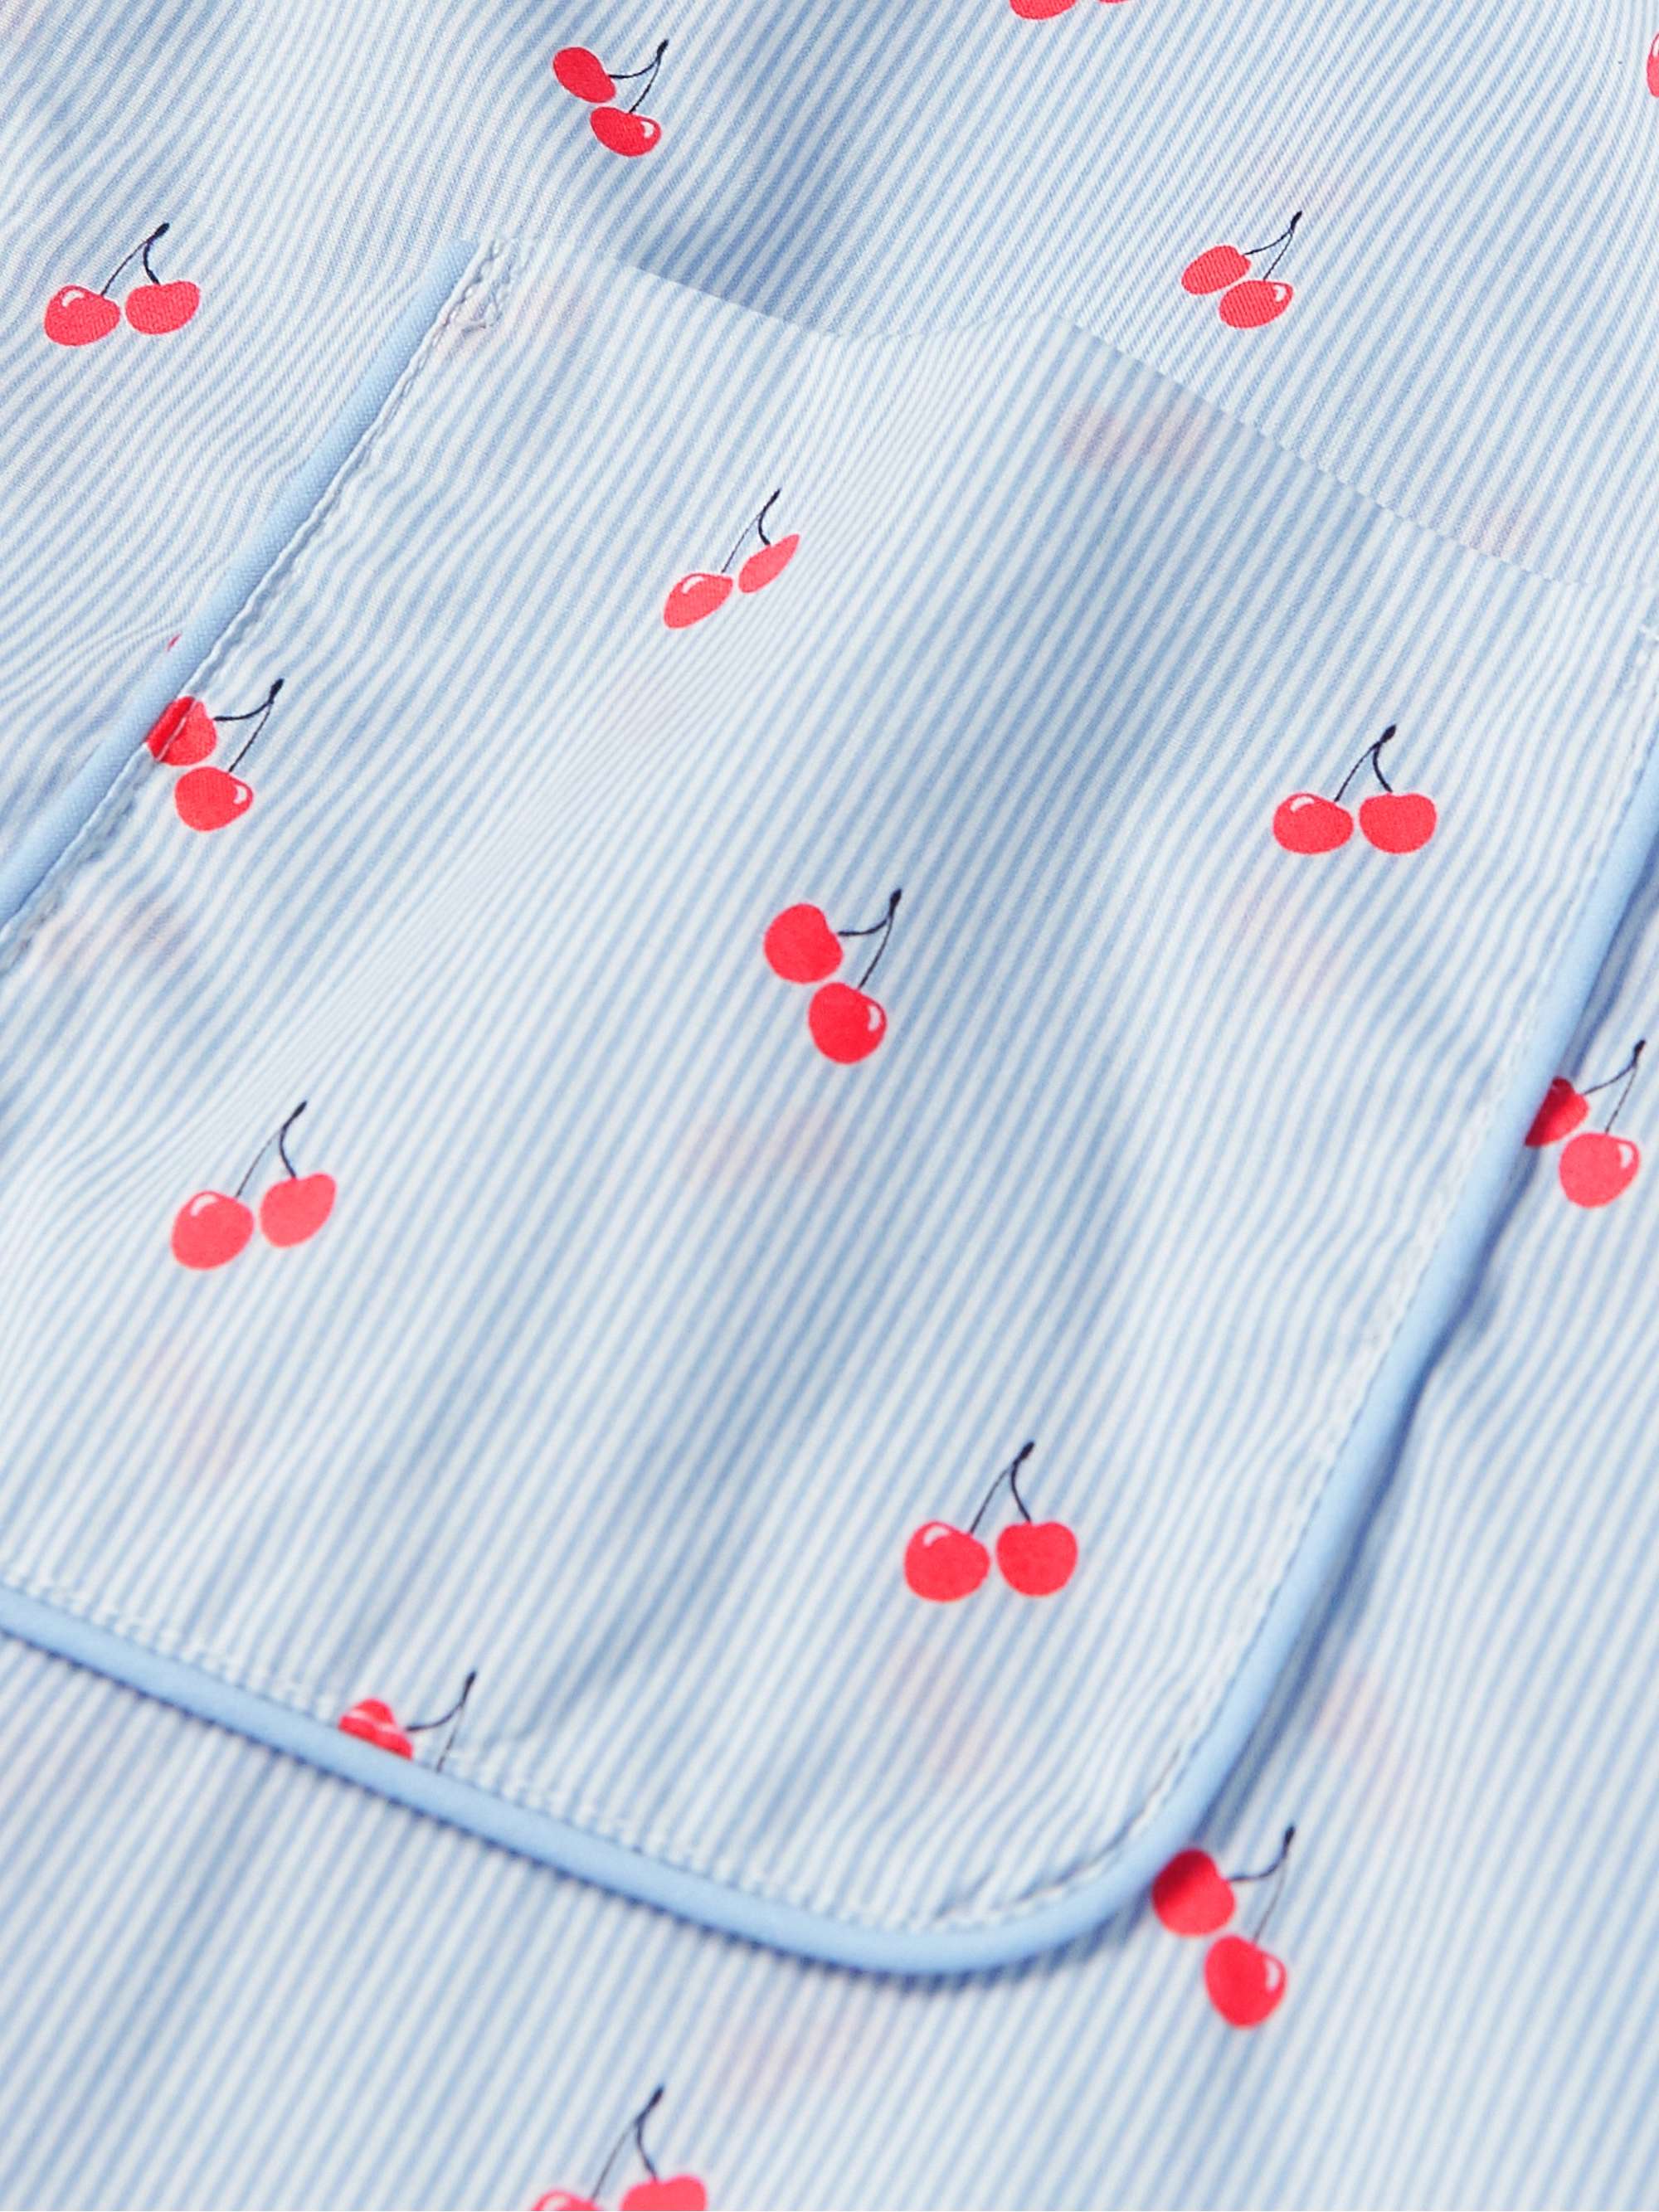 DEREK ROSE Nelson Printed Cotton-Poplin Pyjama Set